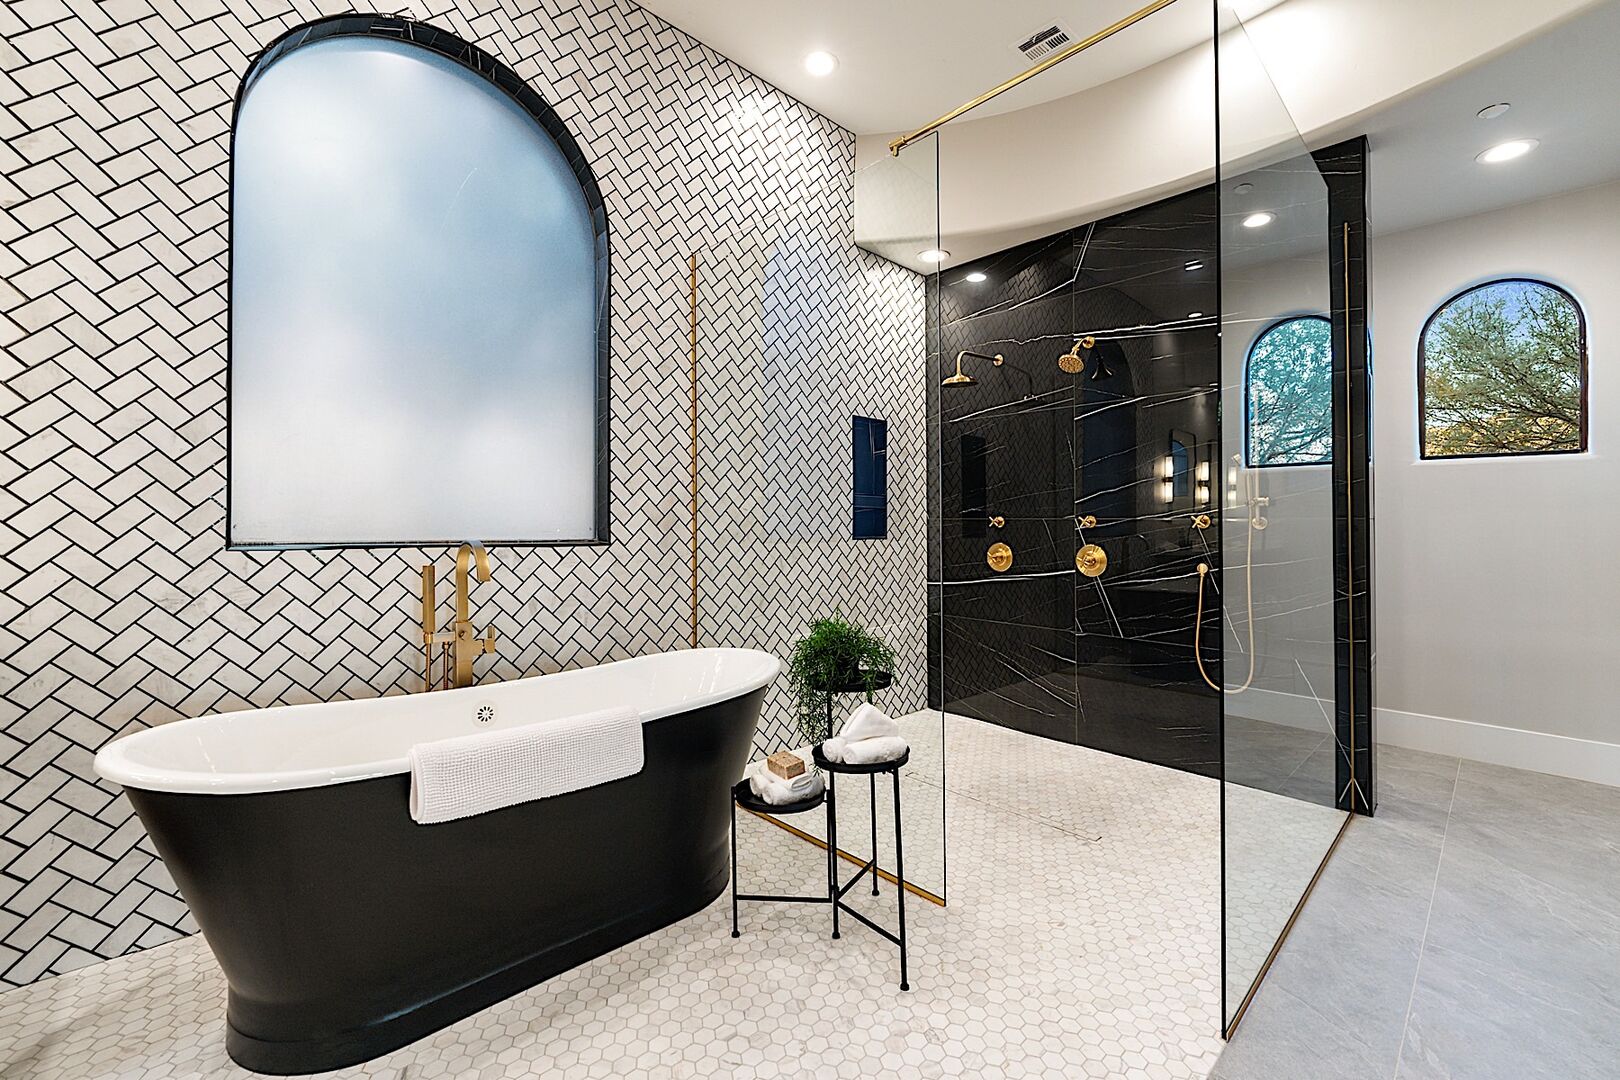 Master Bathroom - Elegant soaking tub, large walk-in shower and dual vanity